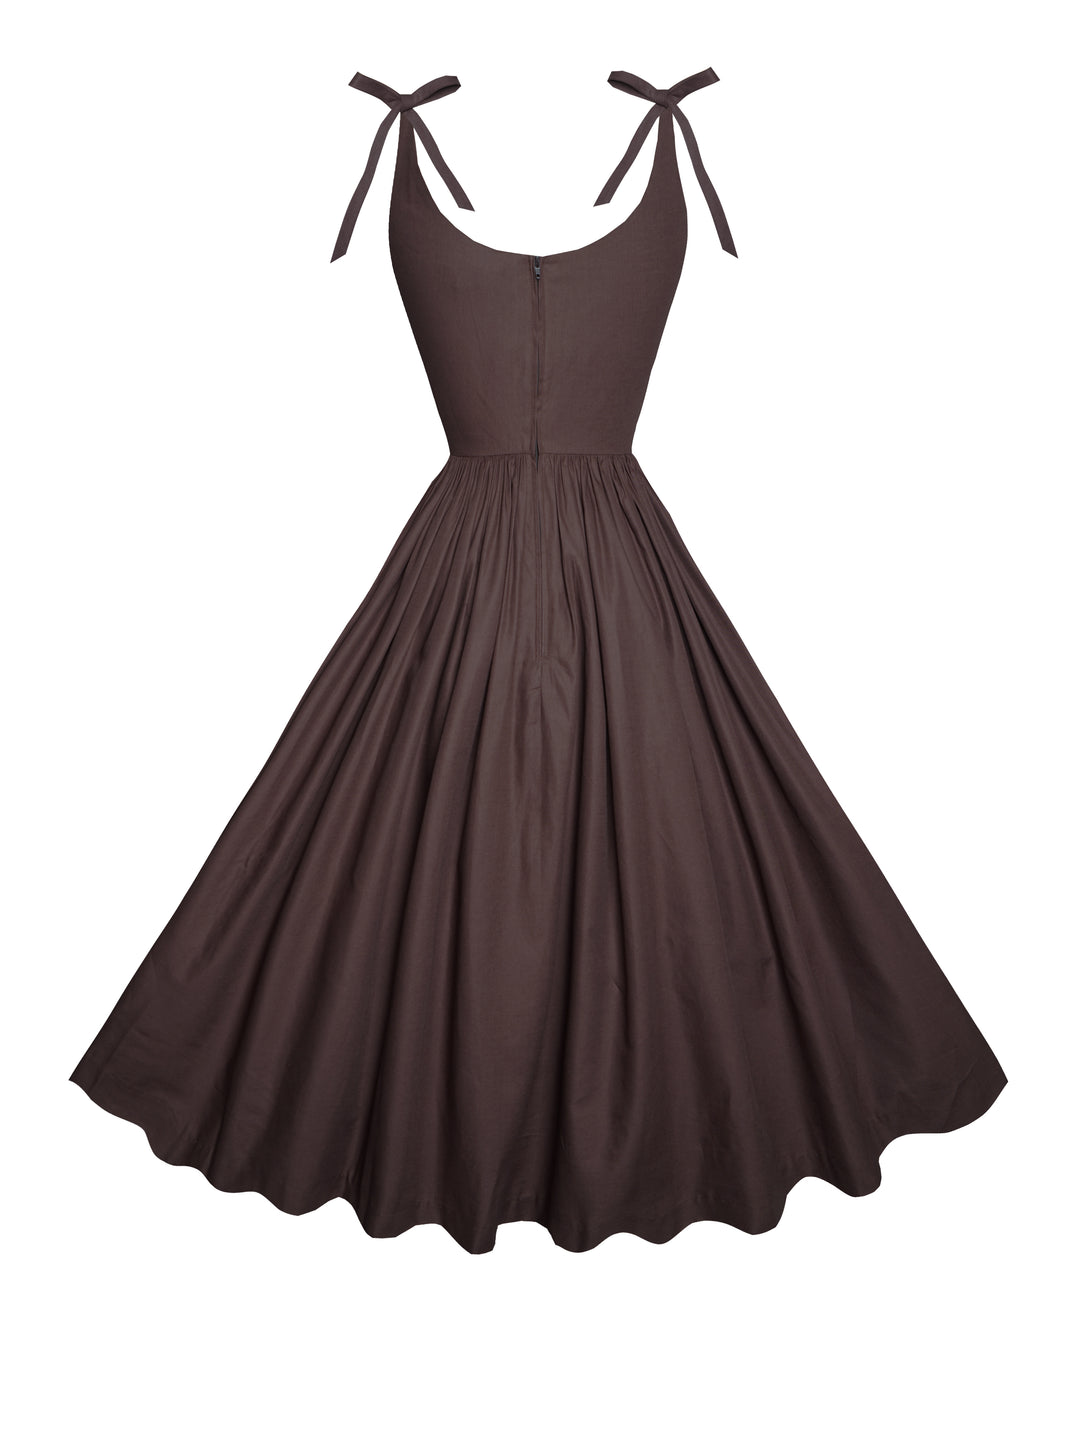 MTO - Birdie Dress in Hickory Brown Cotton